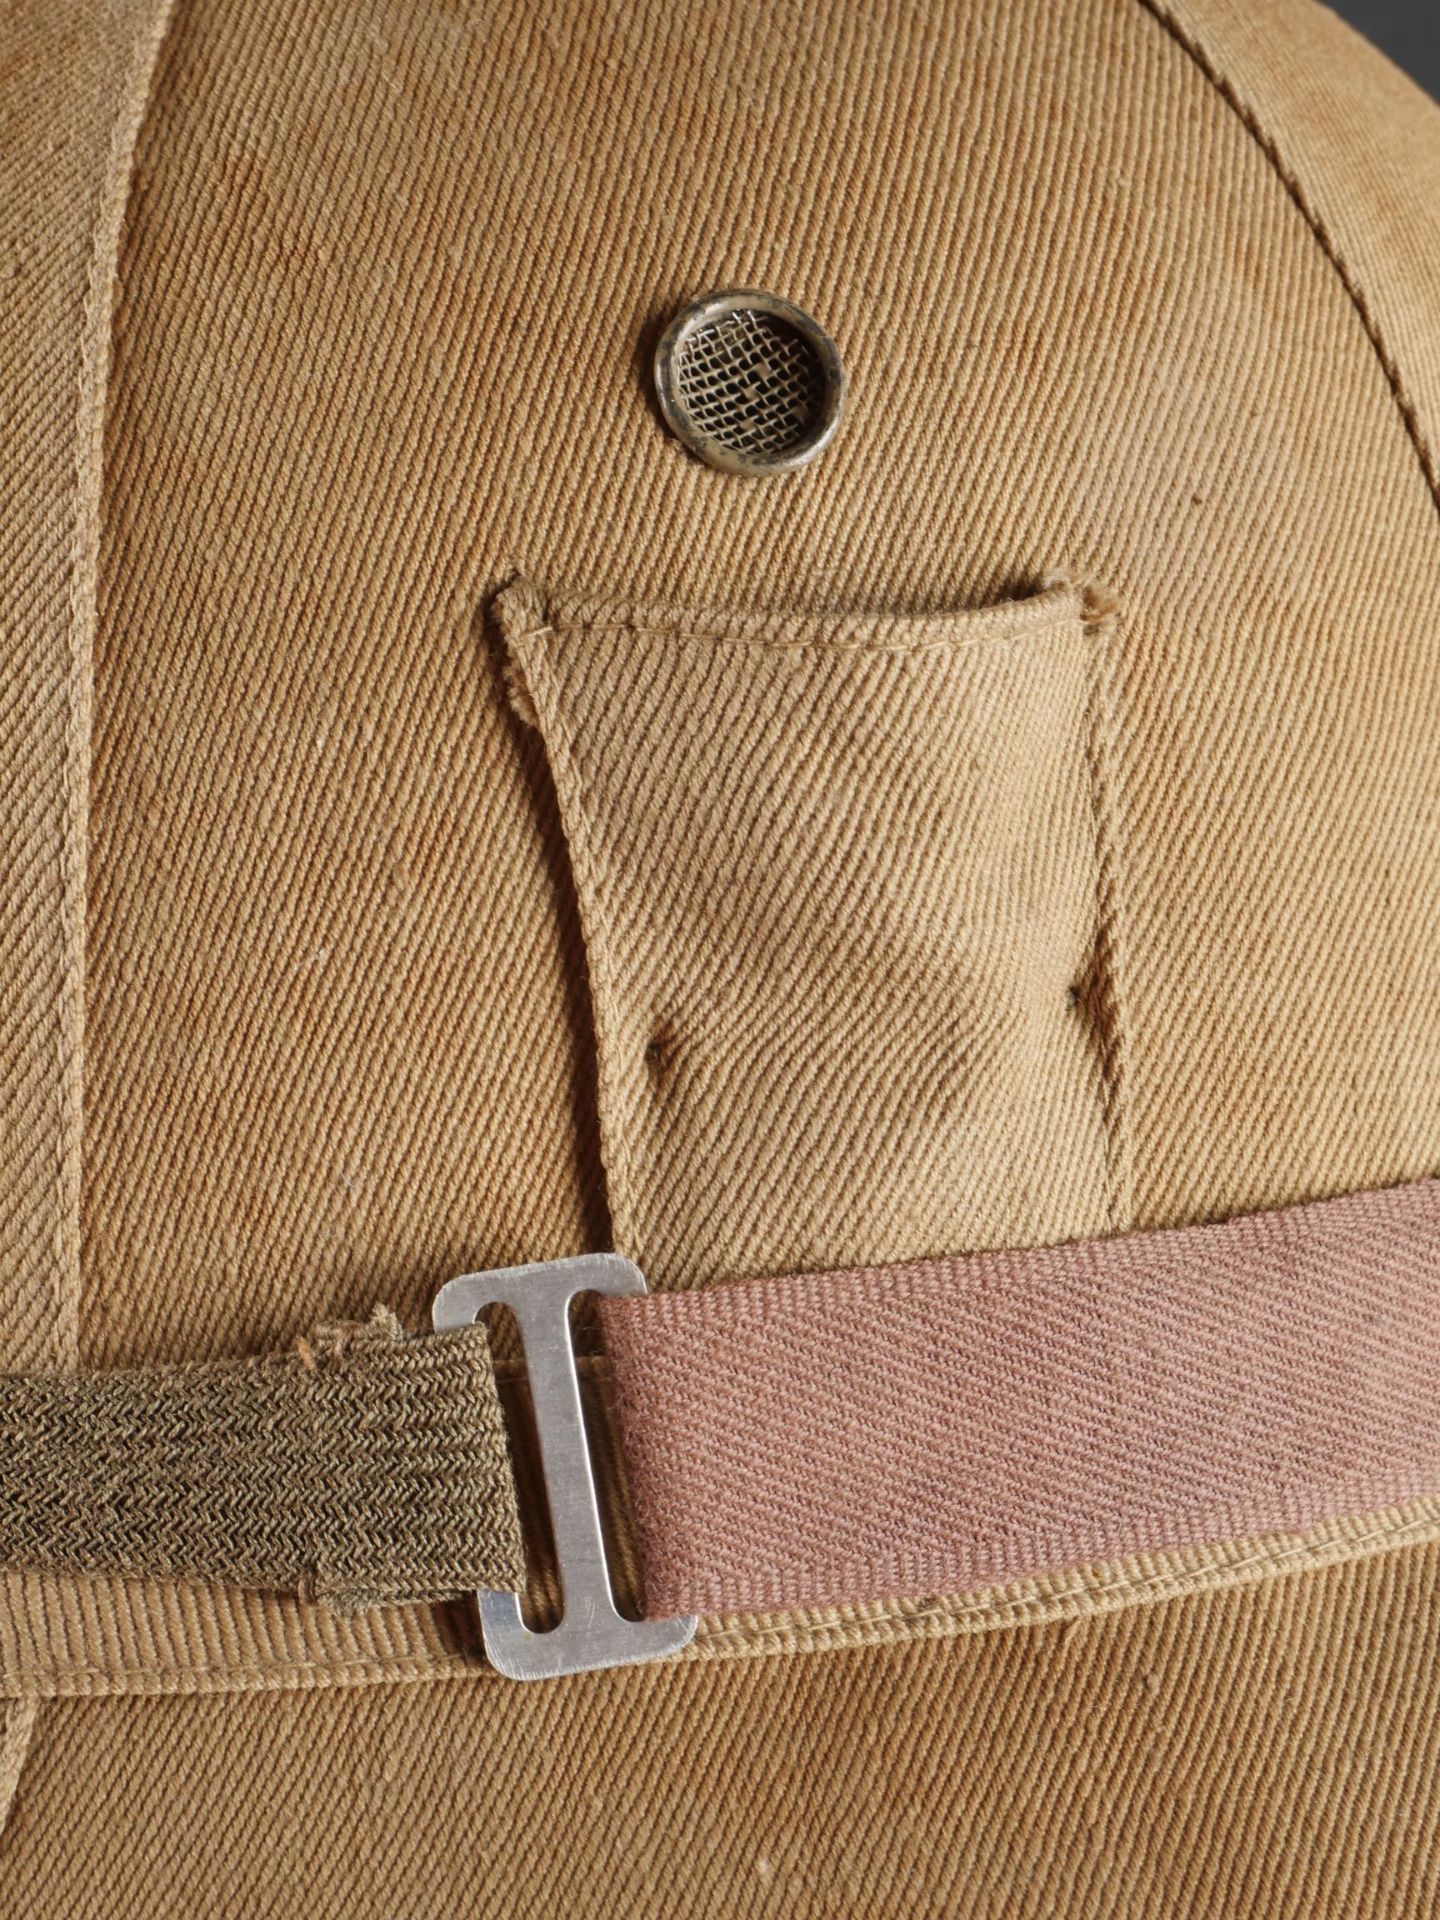 Casque tropicale du 8eme Regiment Bersaglieri. Tropical helmet of the 8th Bersaglieri Regiment. - Bild 16 aus 19